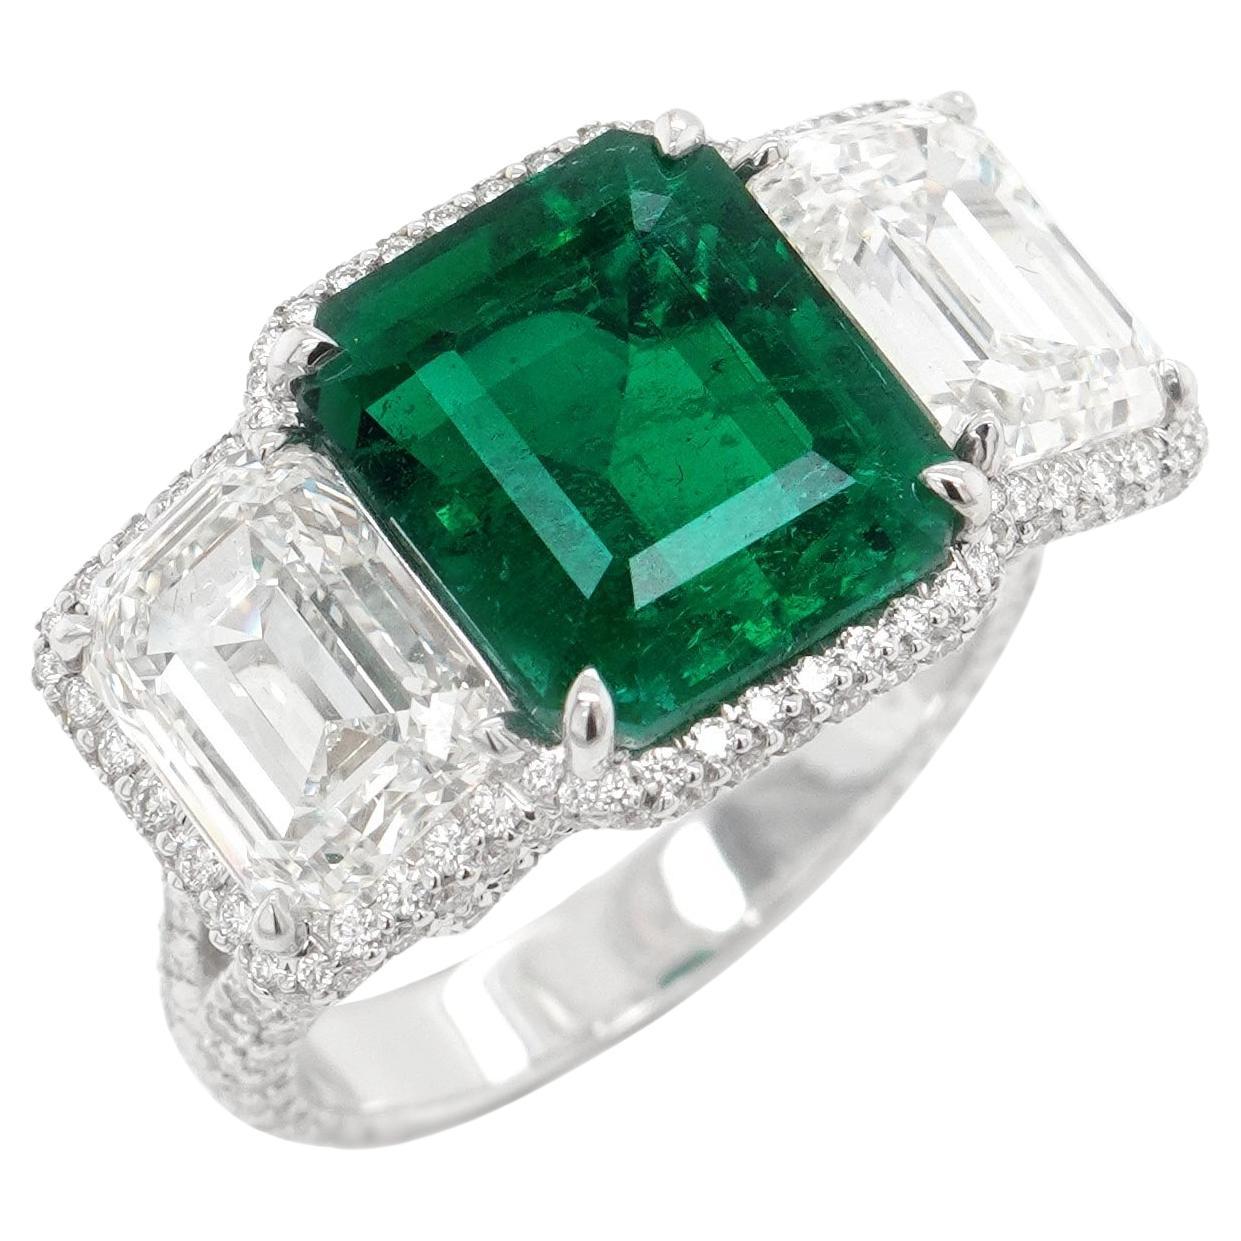 BENJAMIN FINE JEWELRY 5.45 cts Emerald with Diamond 18K Ring